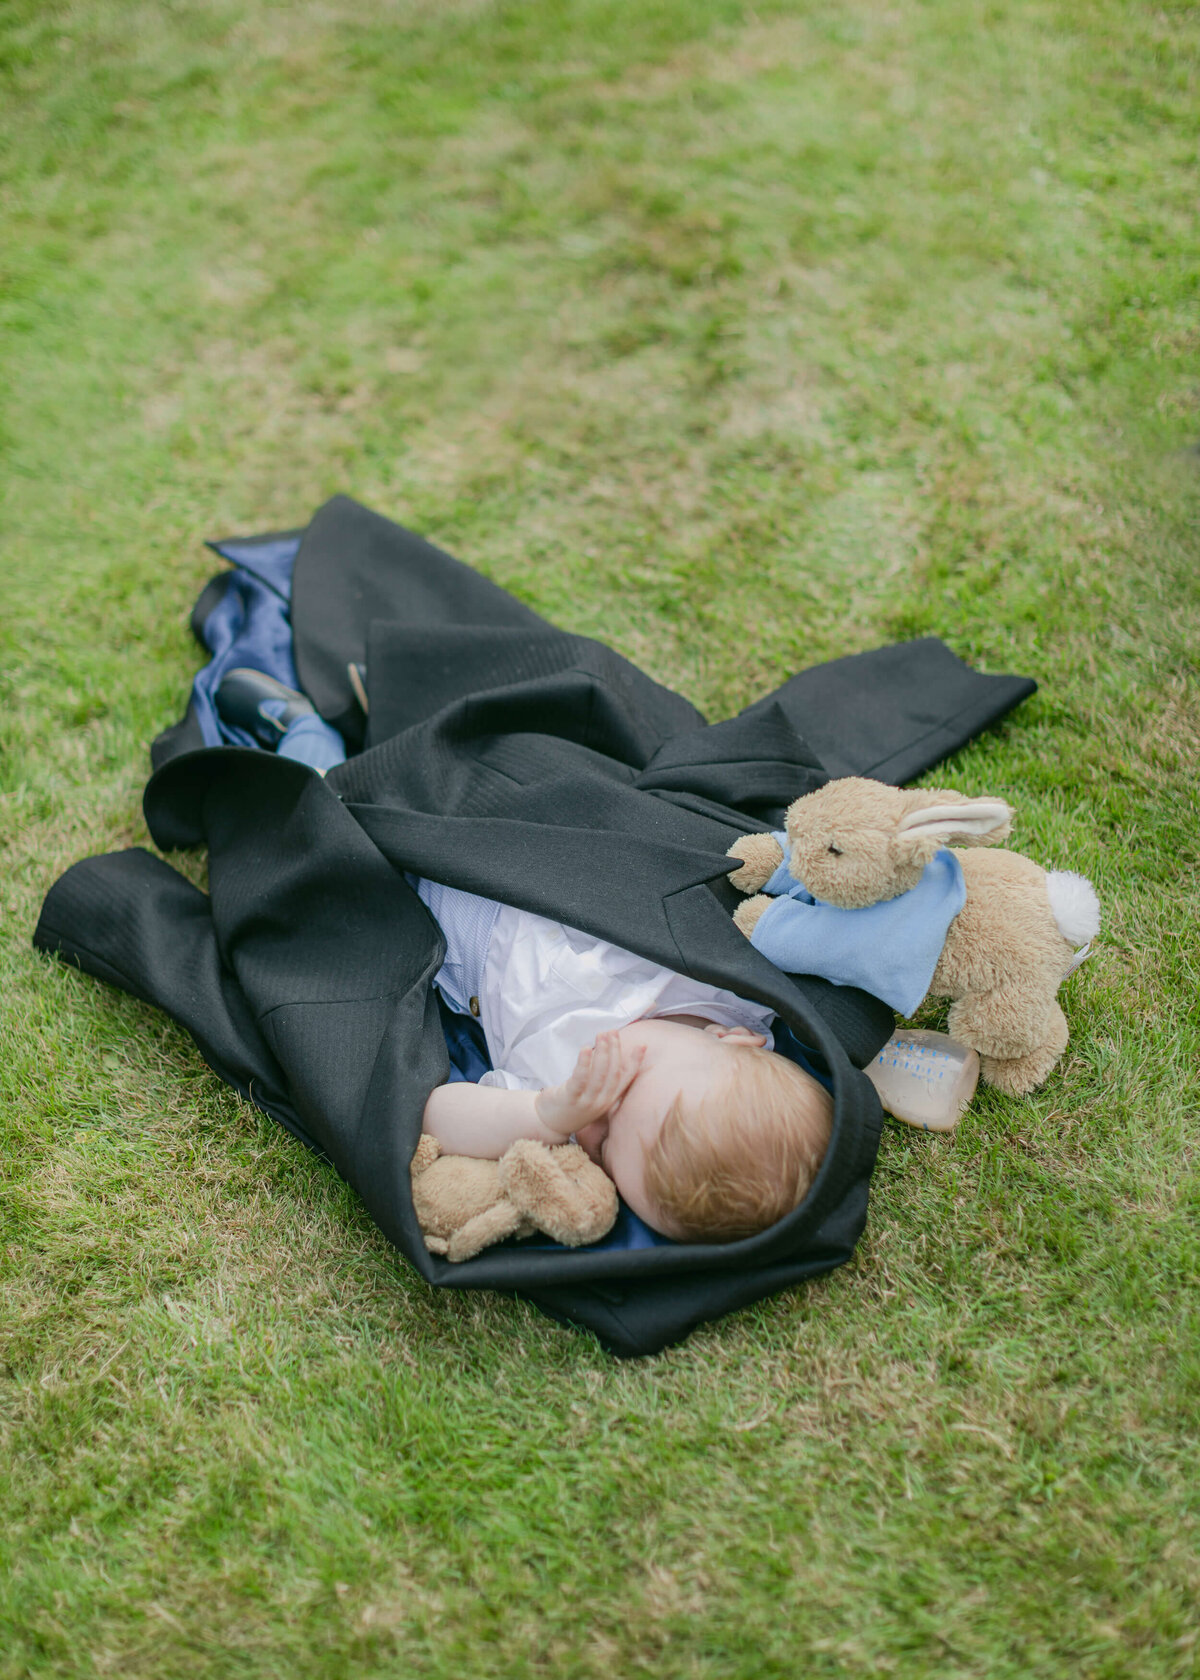 chloe-winstanley-weddings-page-boy-sleeping-teddy